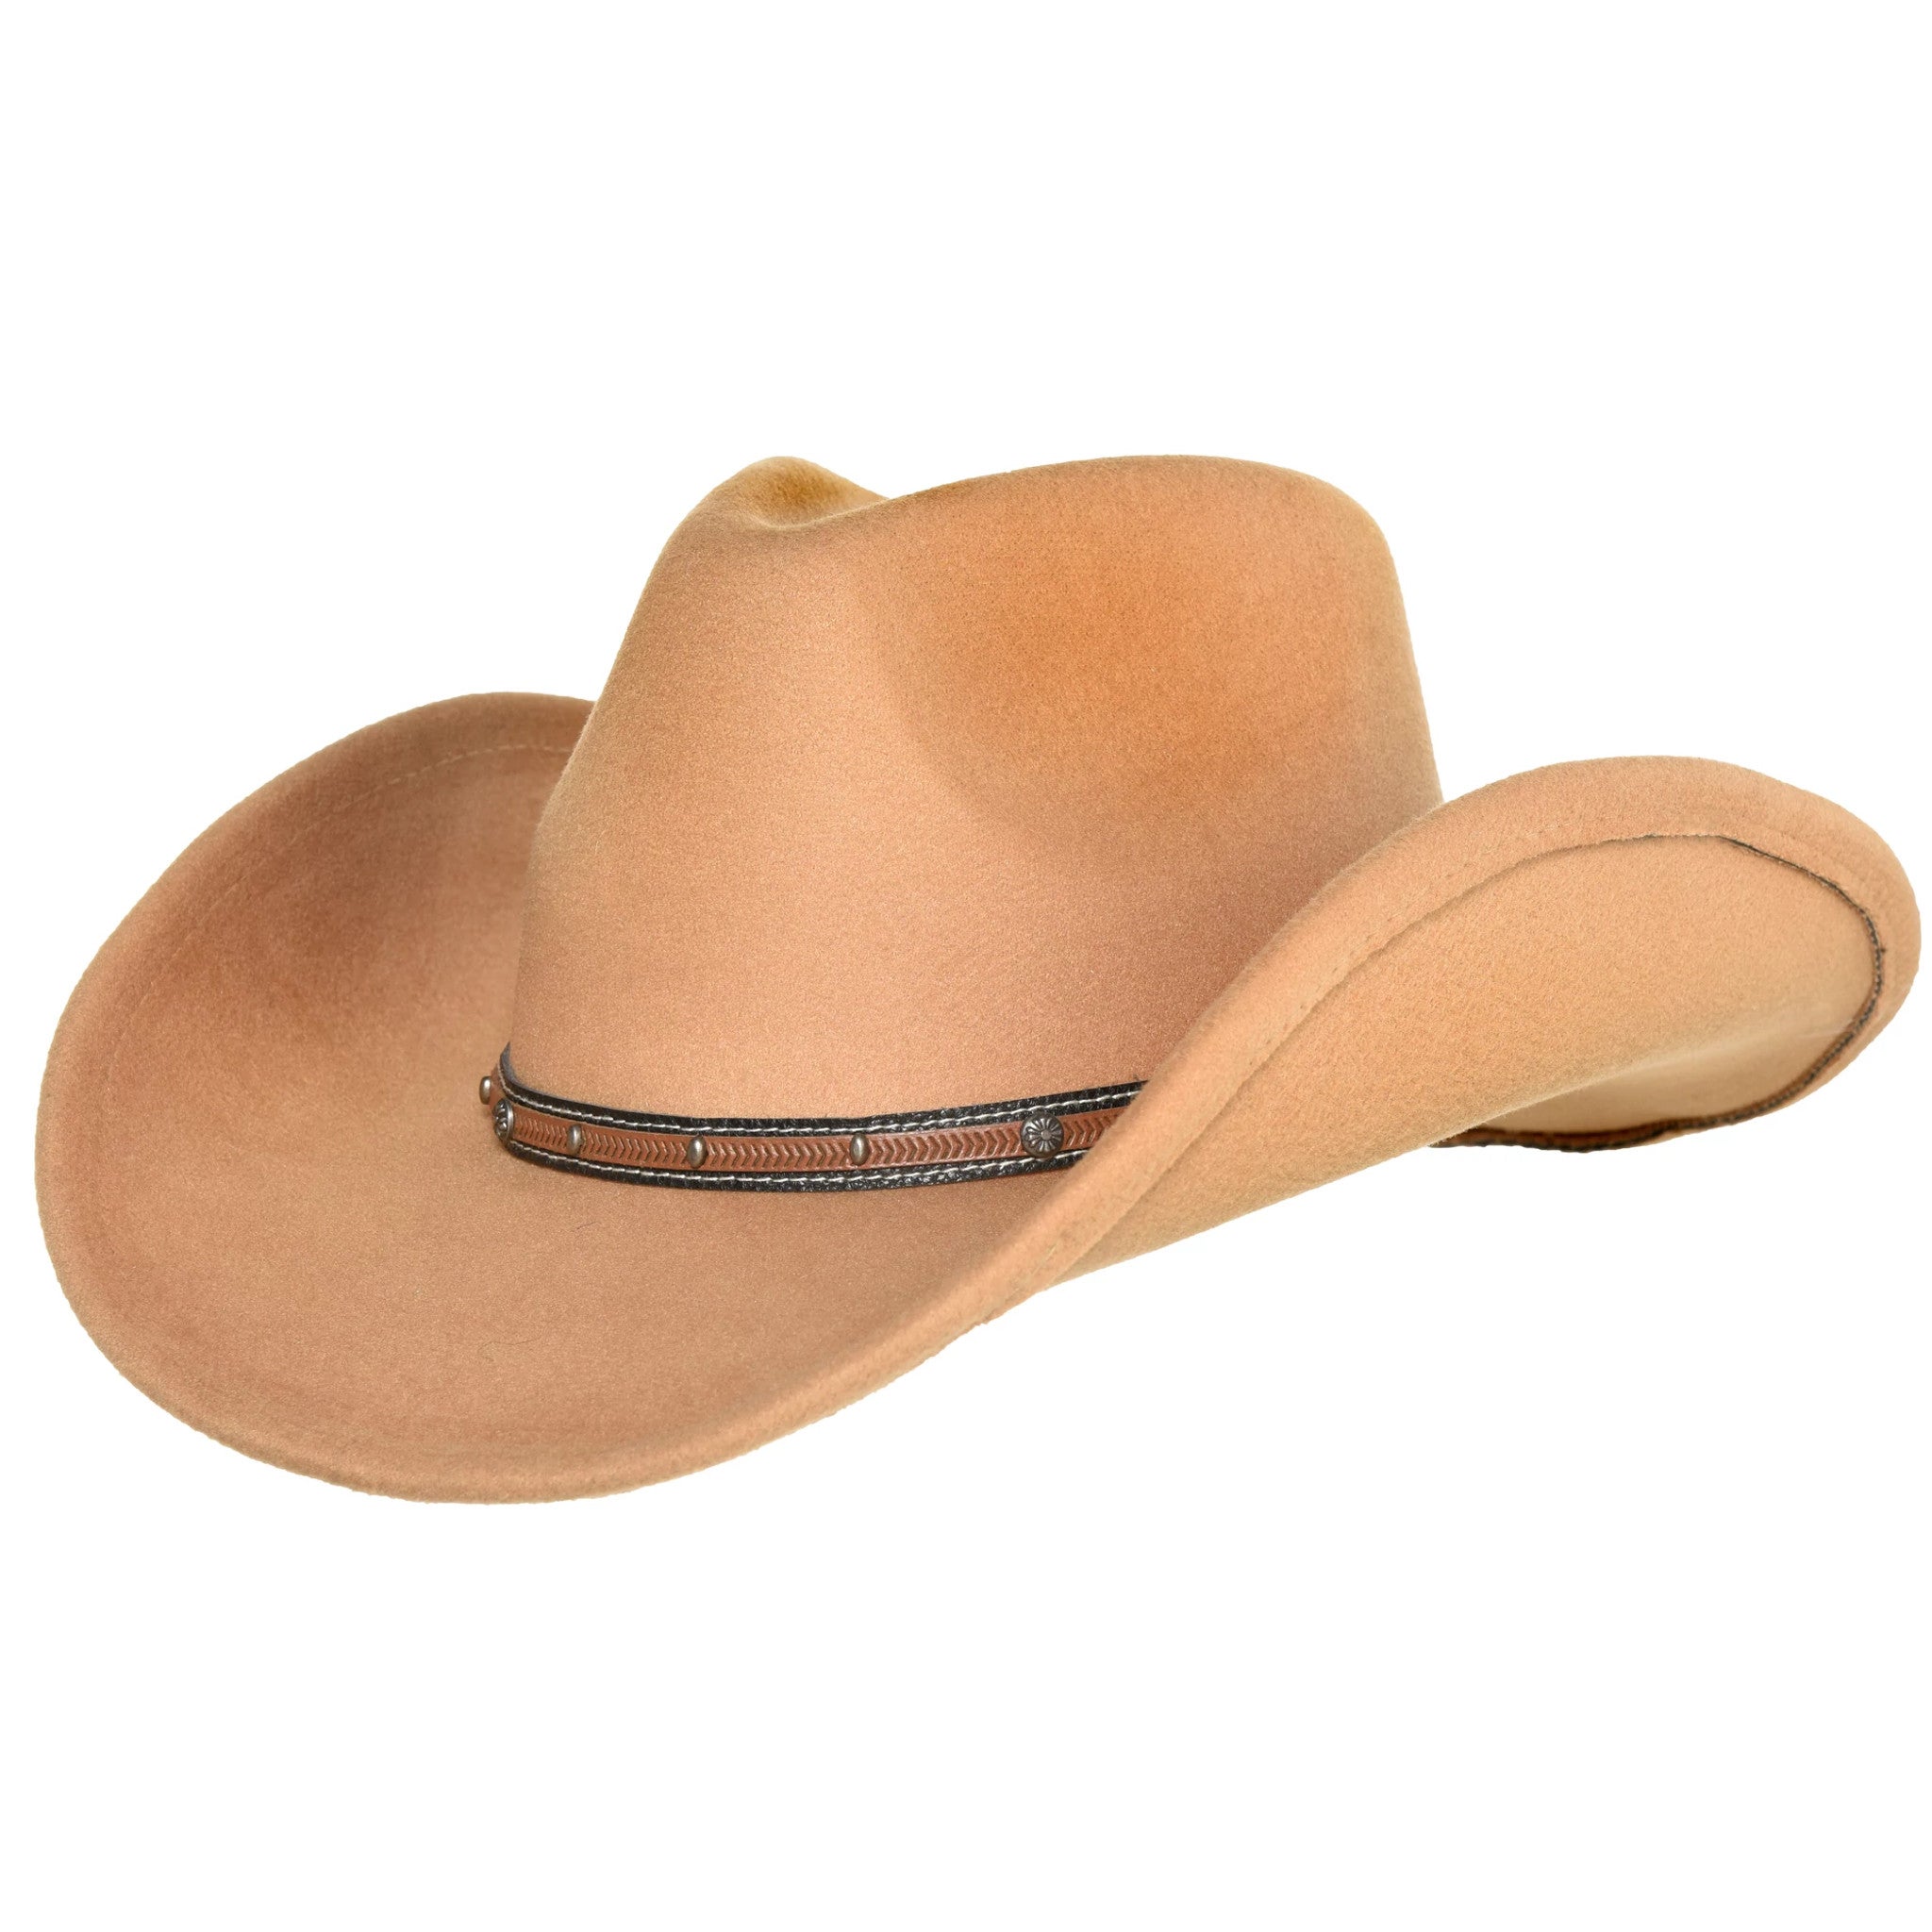 a tan cowboy hat with faux leather trim